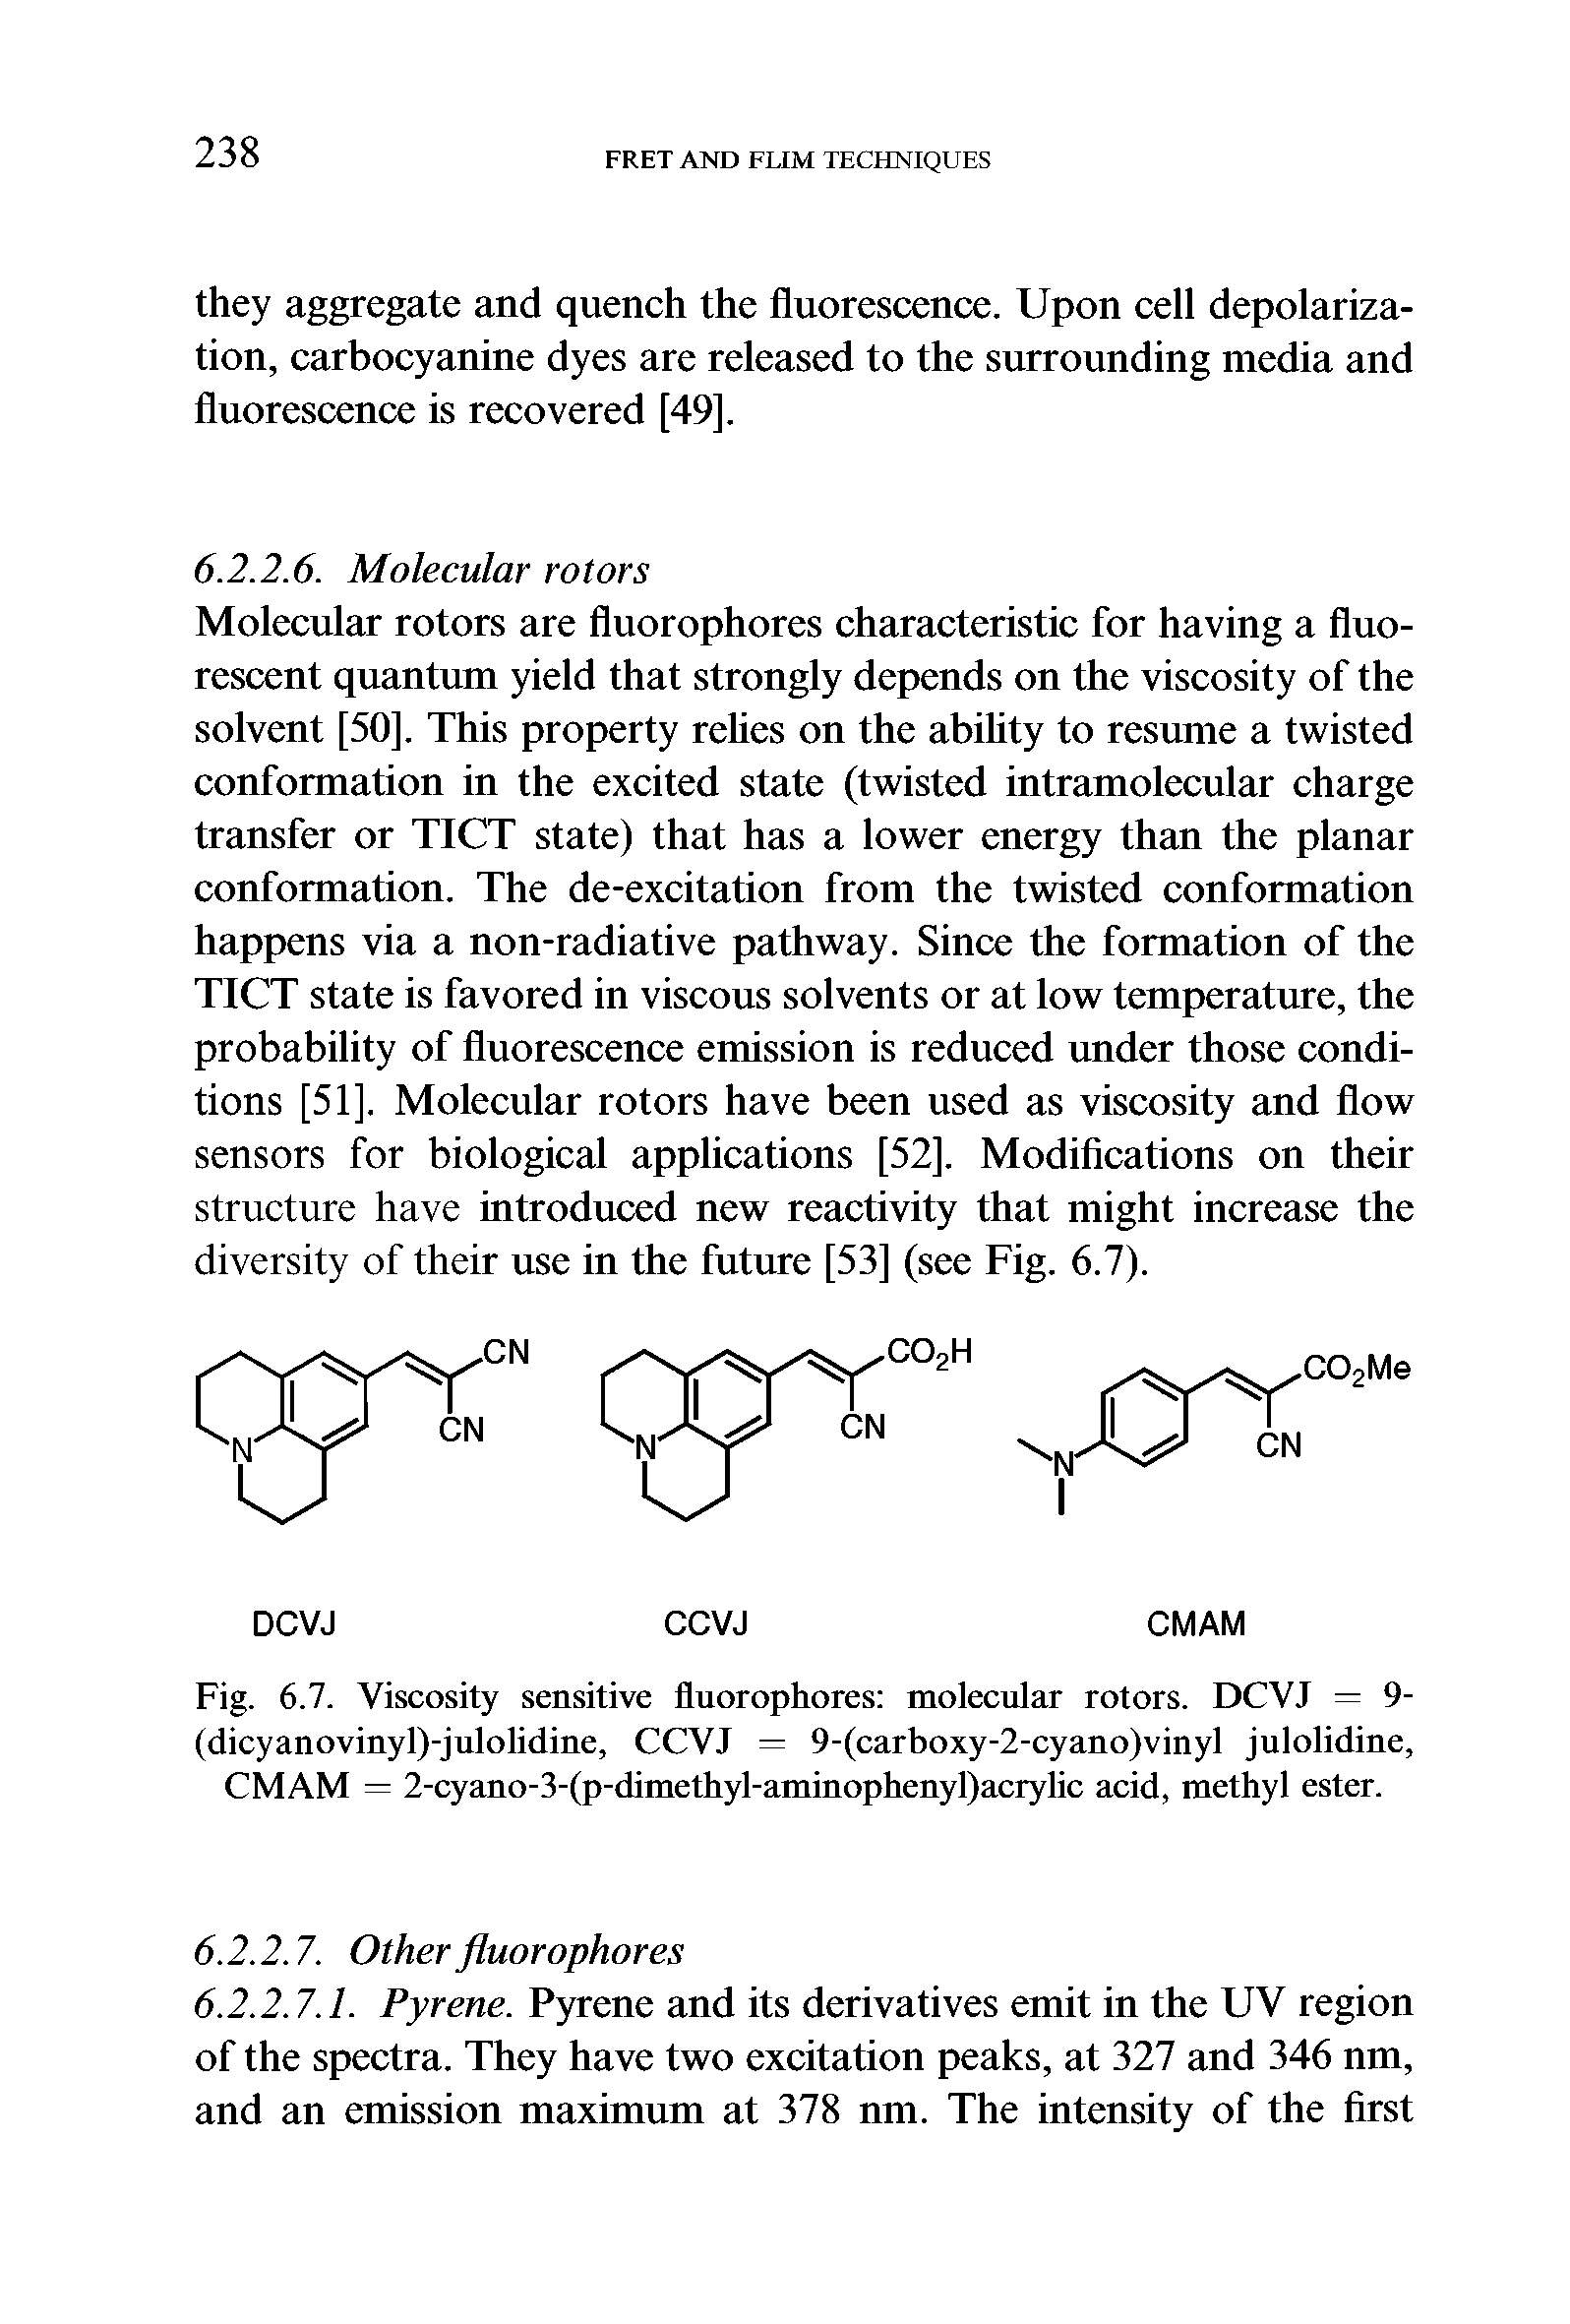 Fig. 6.7. Viscosity sensitive fluorophores molecular rotors. DCVJ = 9-(dicyanovinyl)-julolidine, CCVJ = 9-(carboxy-2-cyano)vinyl julolidine, CMAM = 2-cyano-3-(p-dimethyl-aminophenyl)acrylic acid, methyl ester.